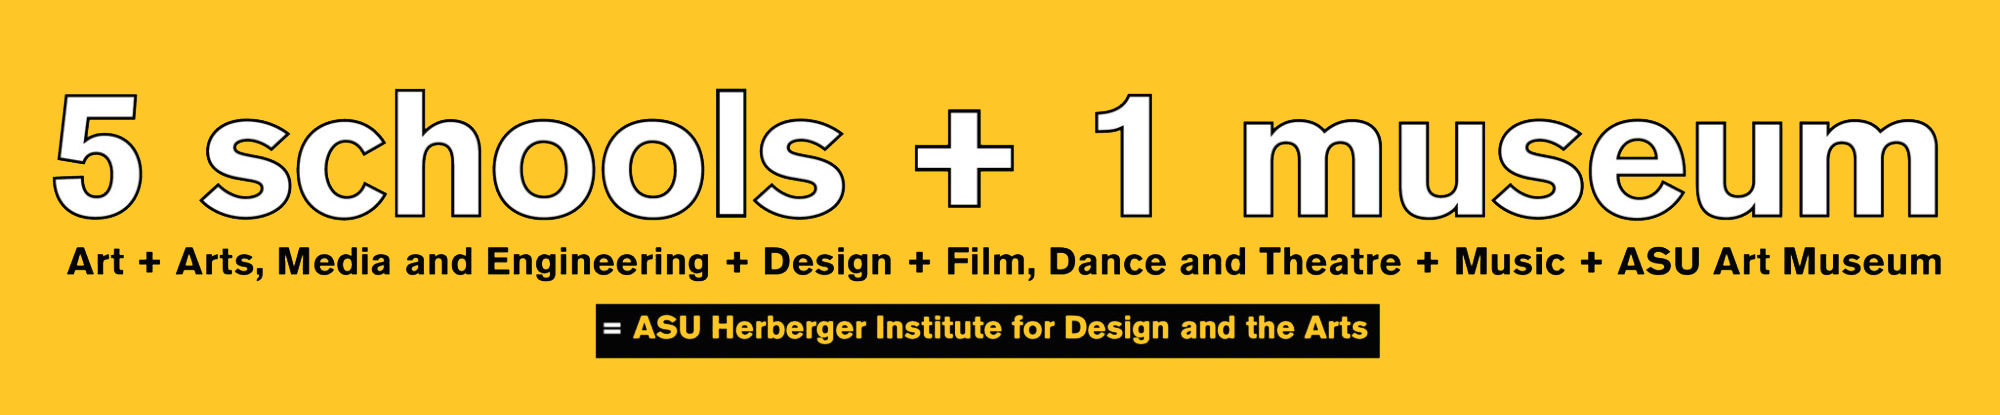 5 schools + 1 museum (Art + Arts, Media and Engineering + Design + Film, Dance and Theatre + Music + ASU Art Museum)